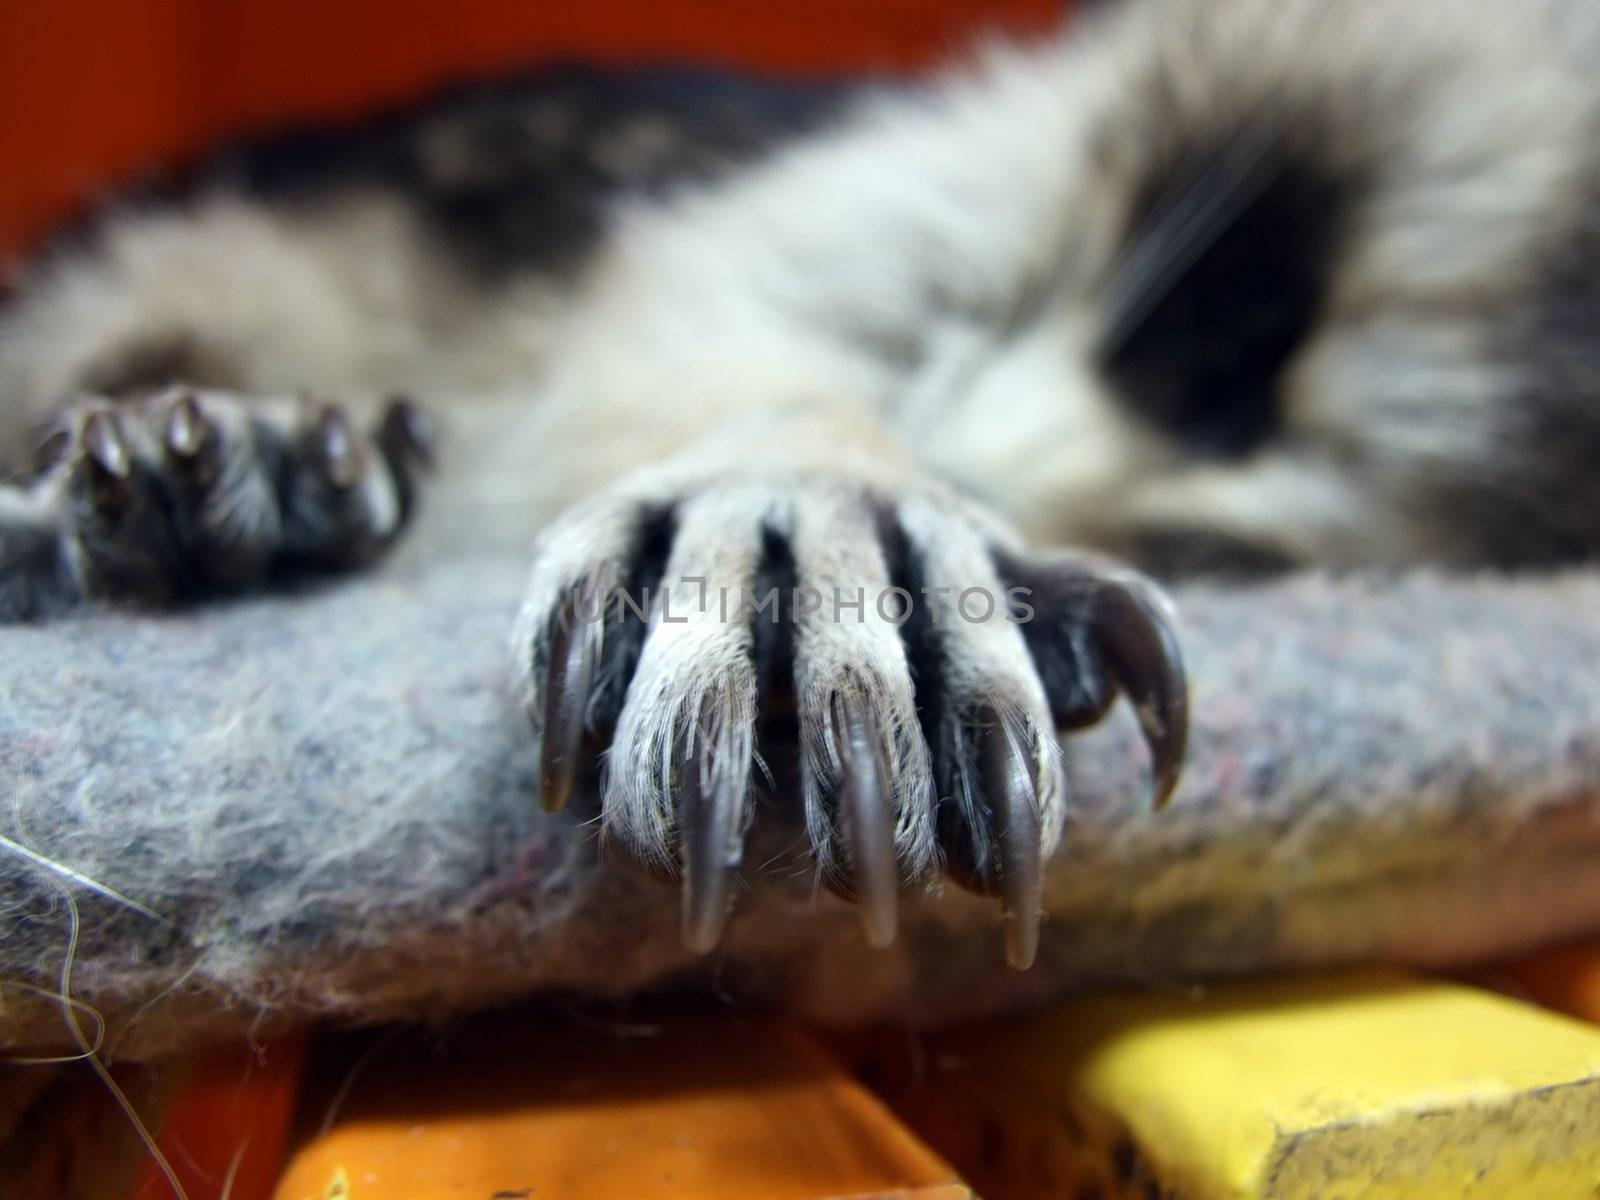 Sleeping Raccoons Paw With Bigg Claws